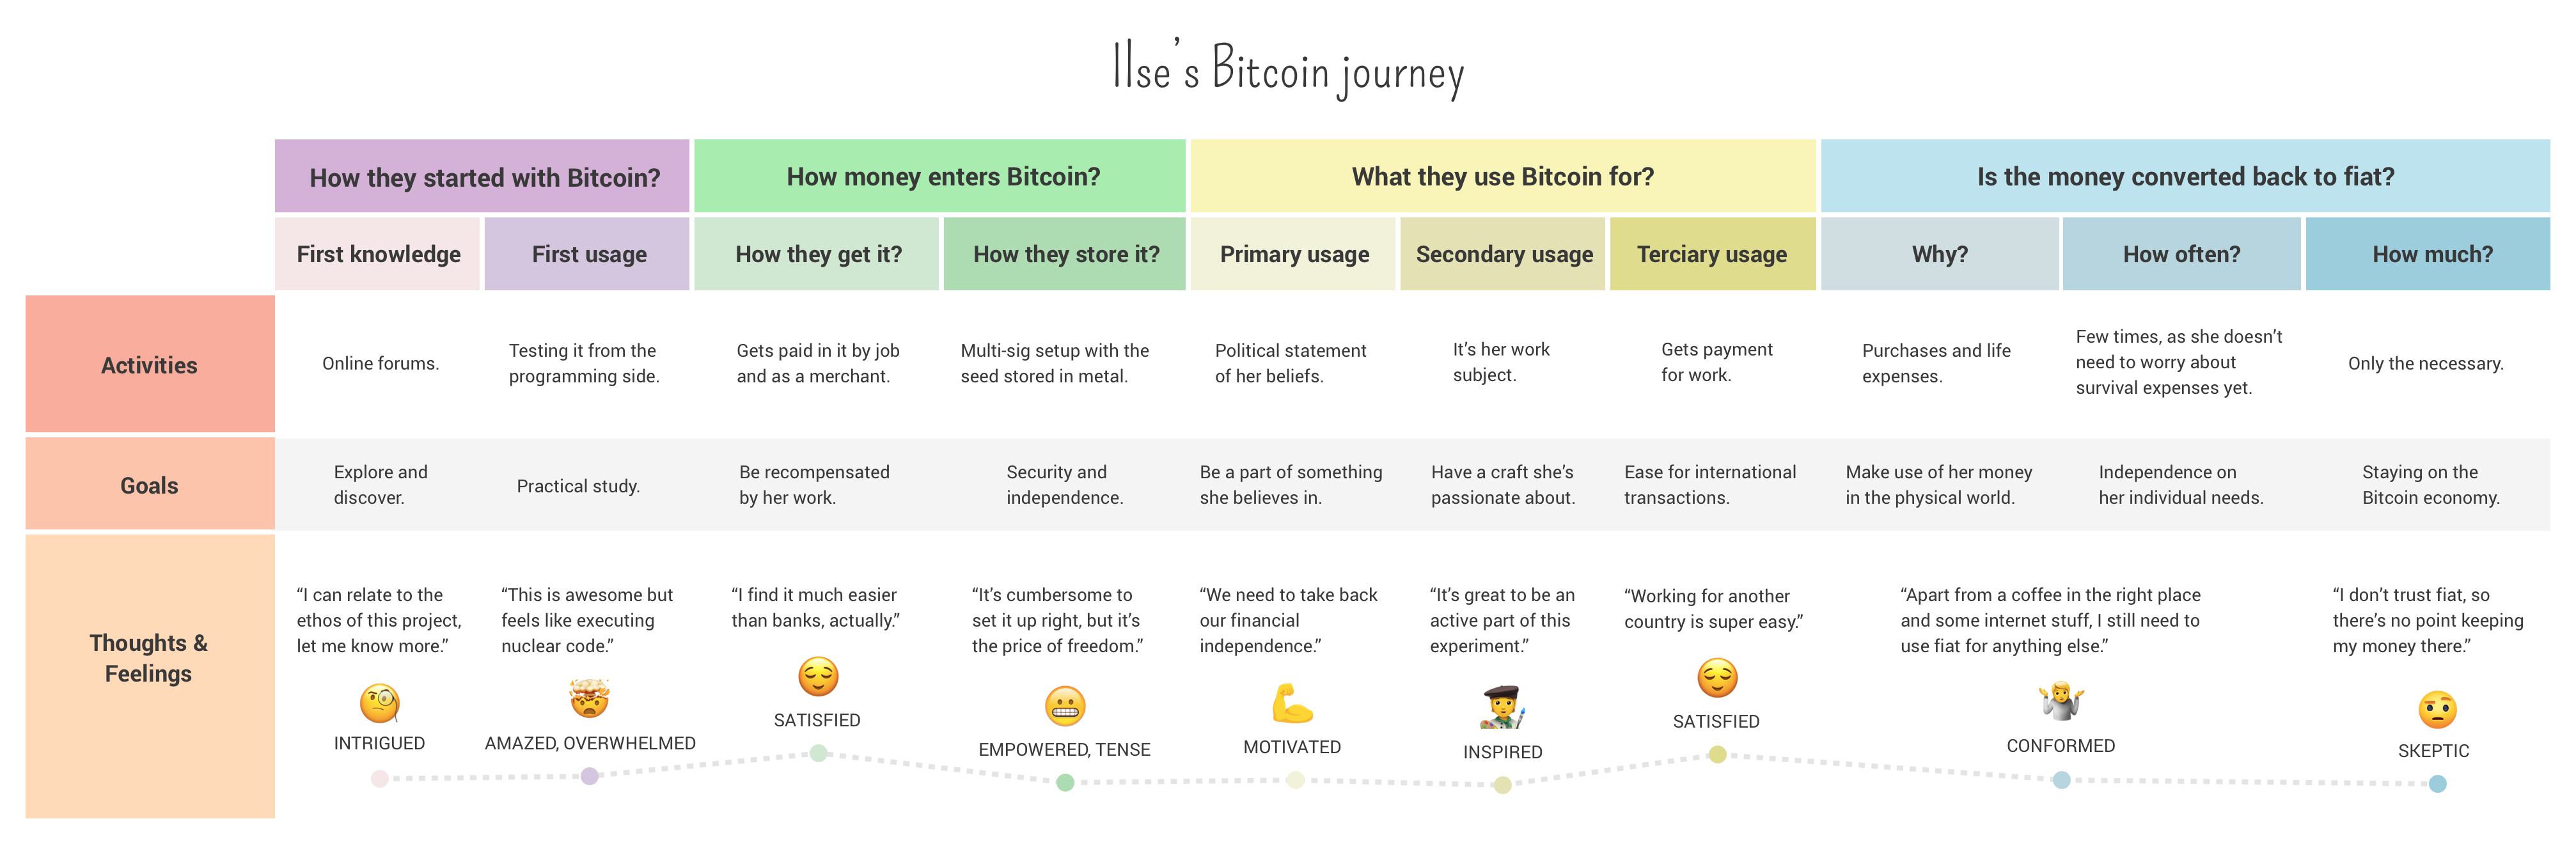 Ilse’s Bitcoin journey